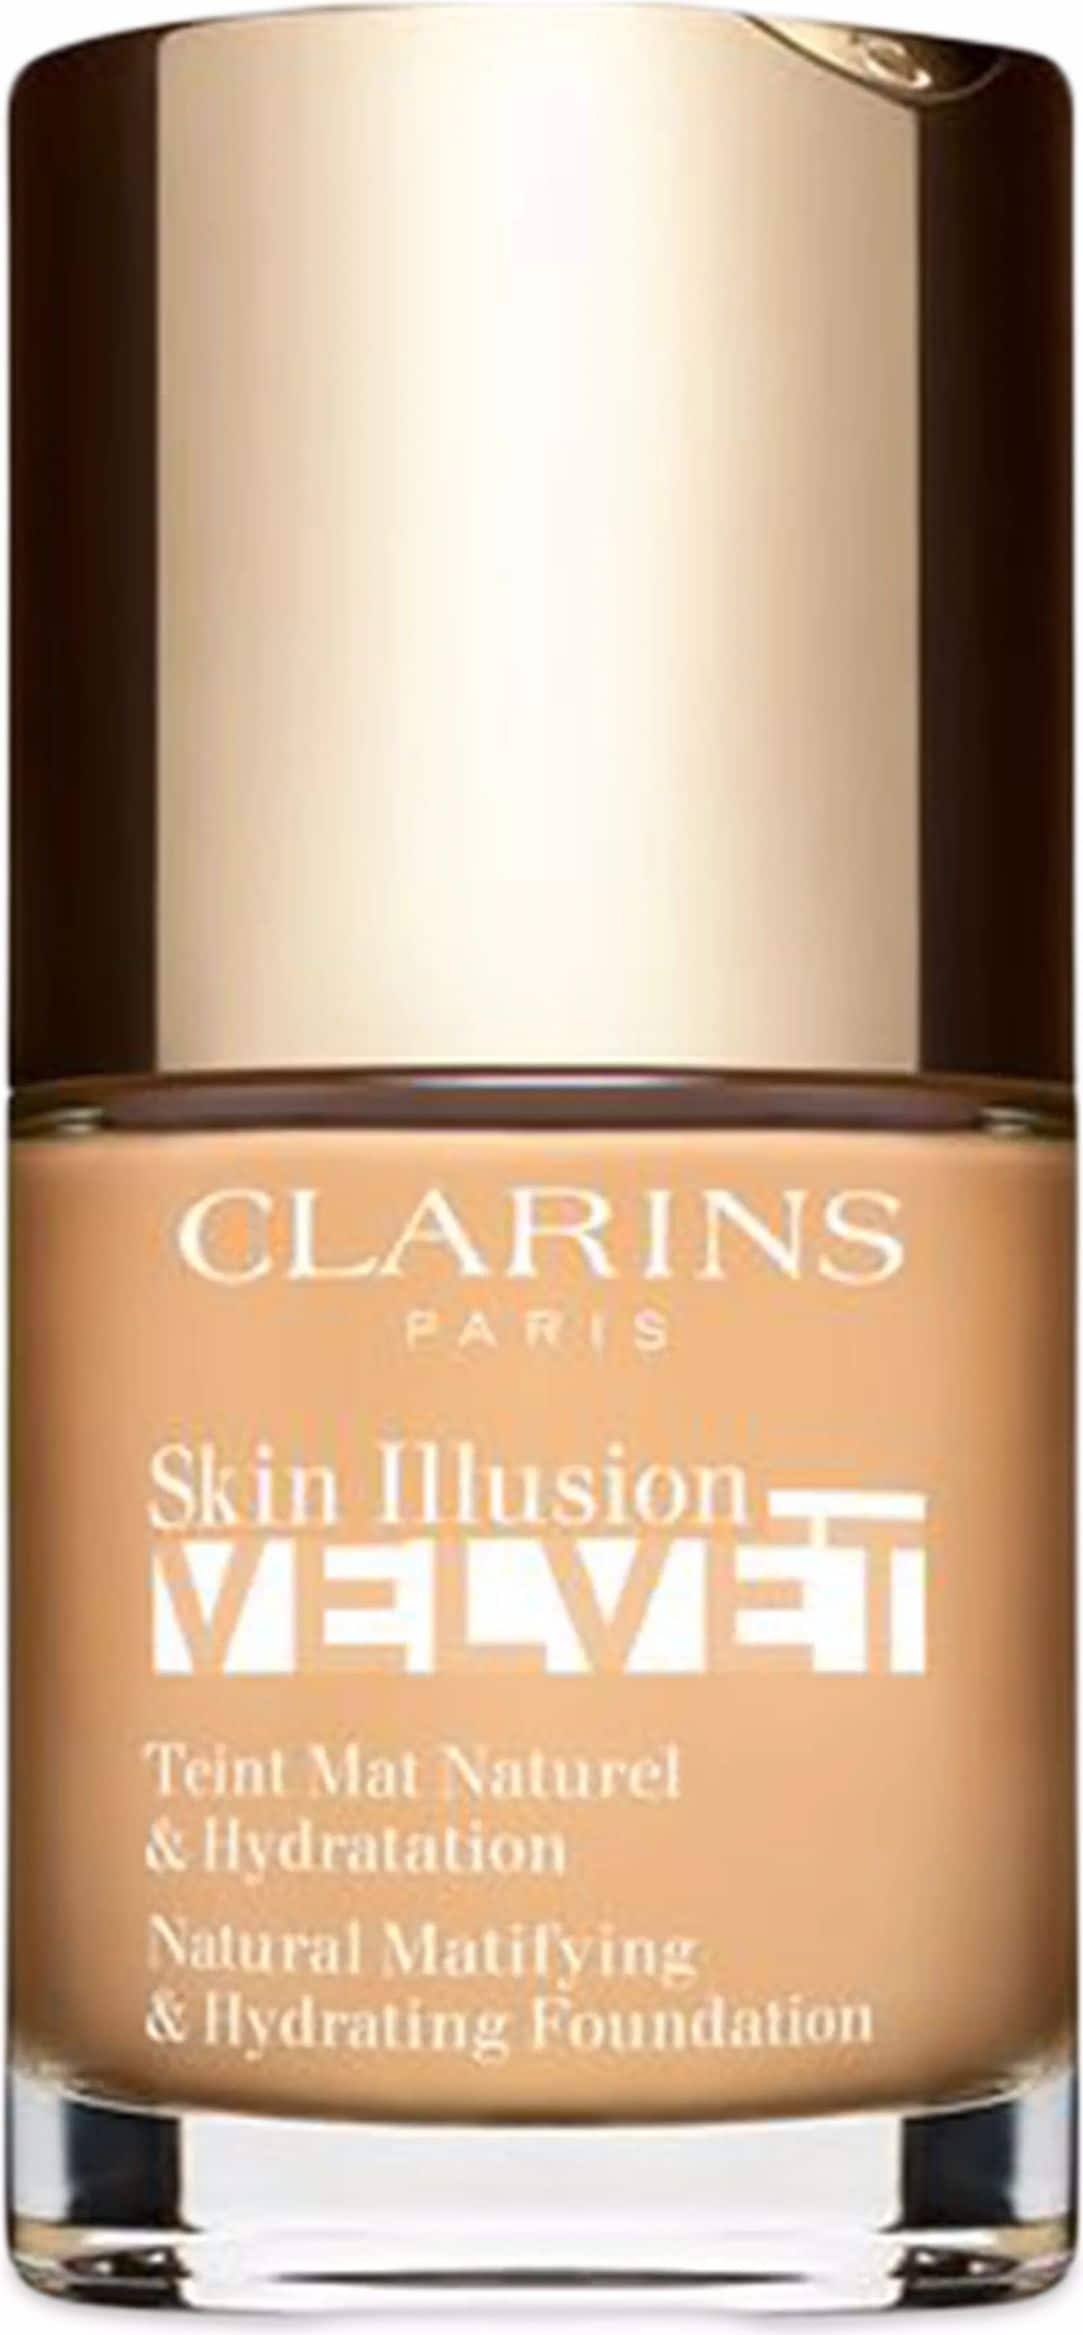 Clarins Skin Illusion Velvet Foundation - #105n 30ml